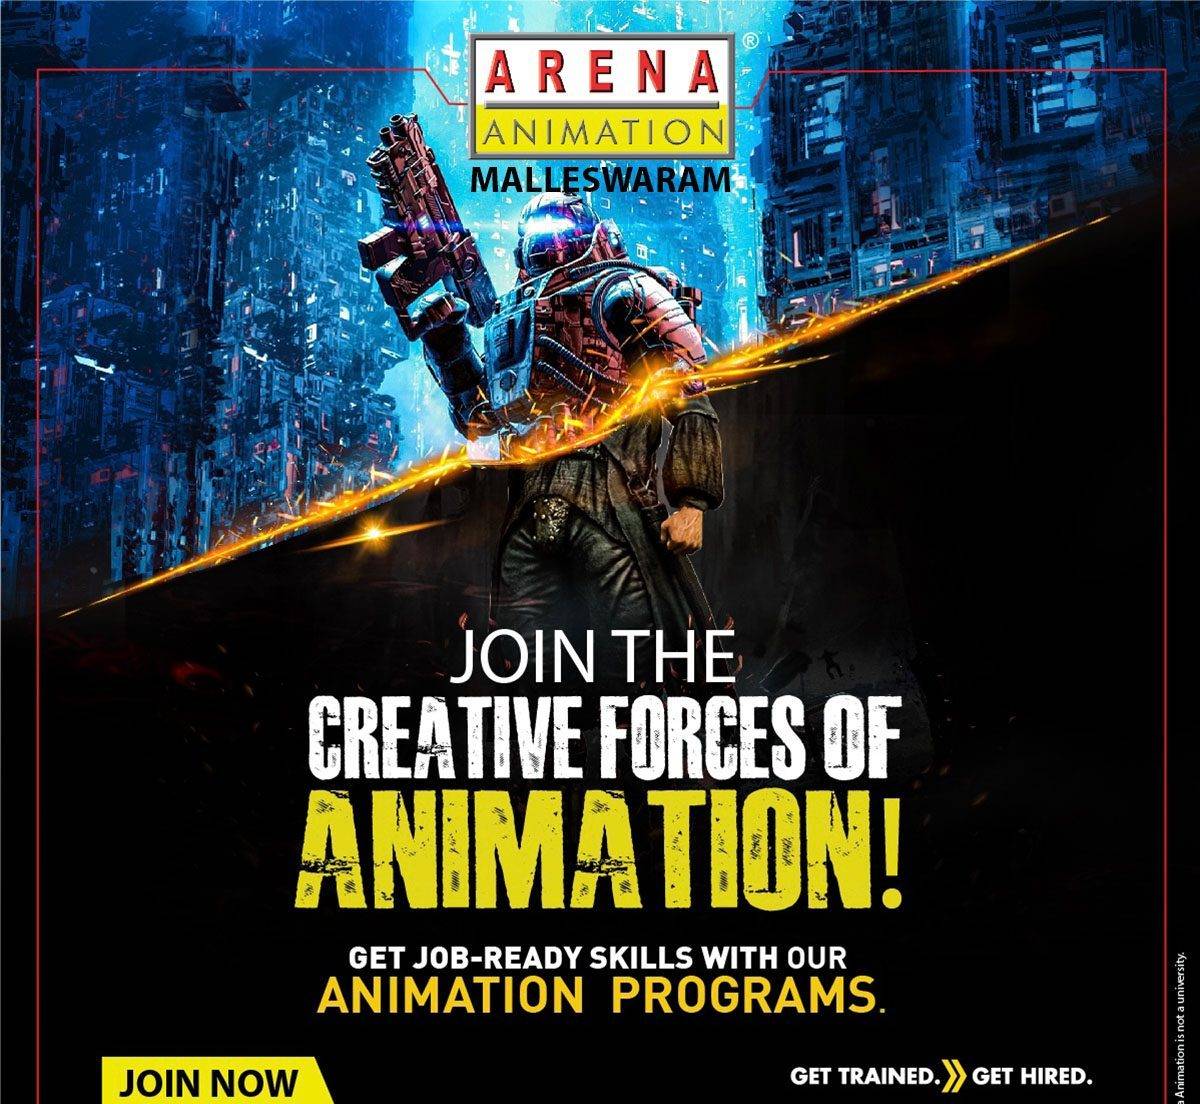 Arena Animation Malleswaram - Contact Us